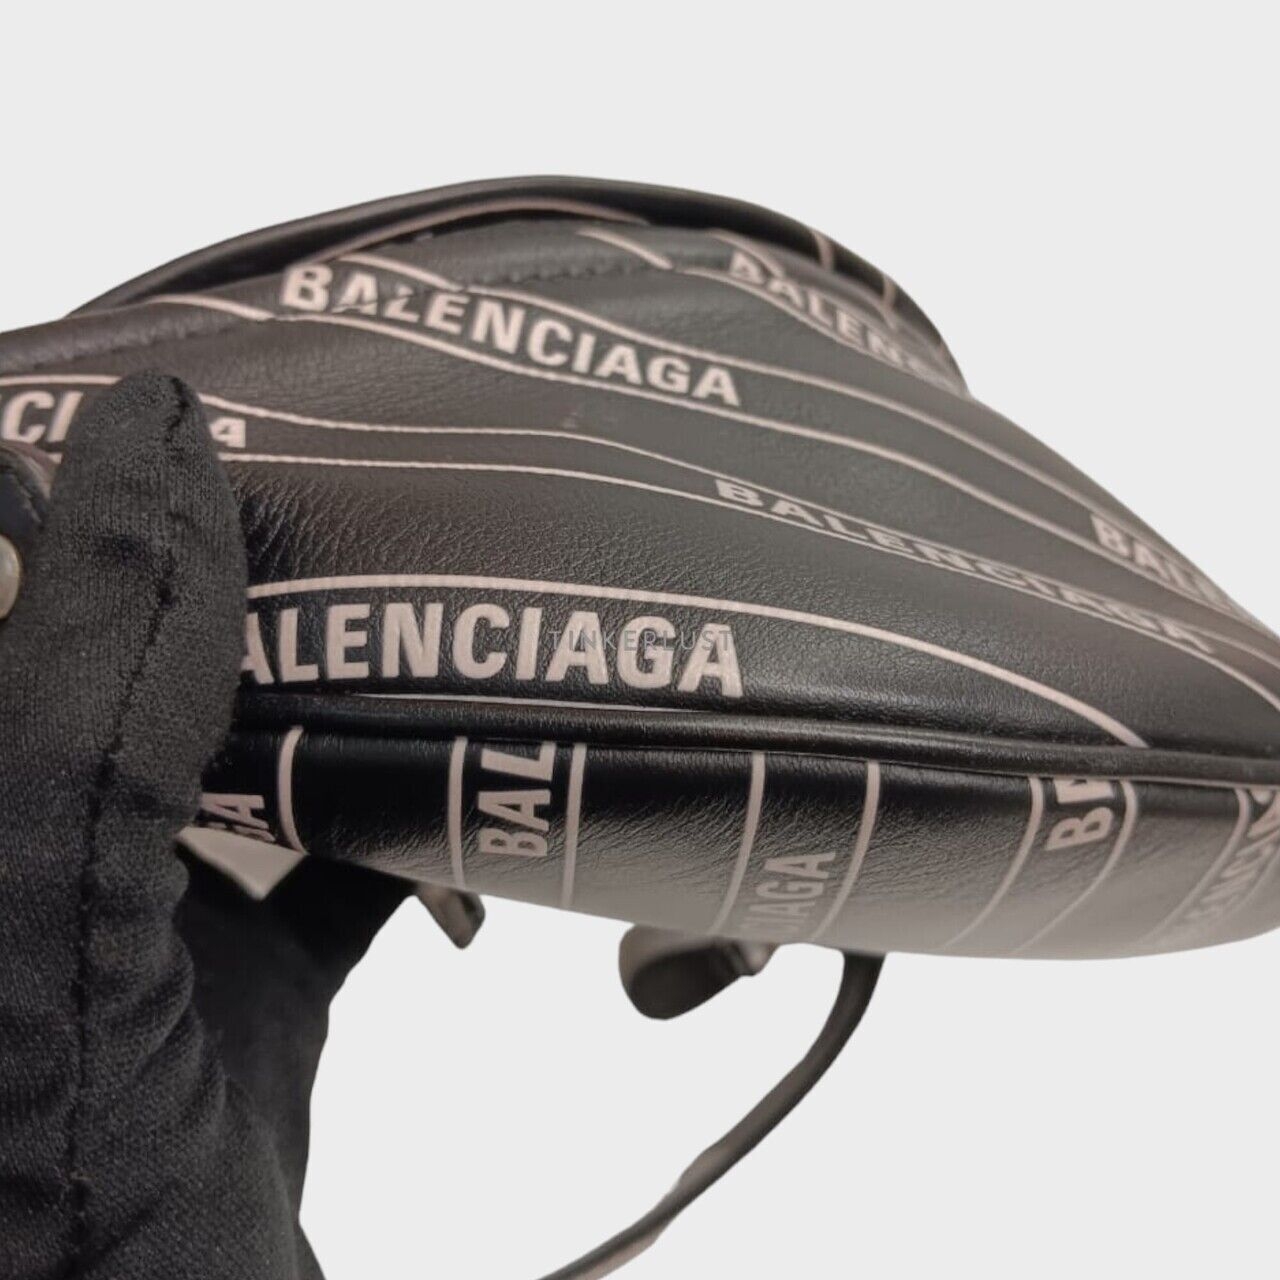 Balenciaga All Over Logo Bumbag Beltbag Black and White 2019 Sling Bag